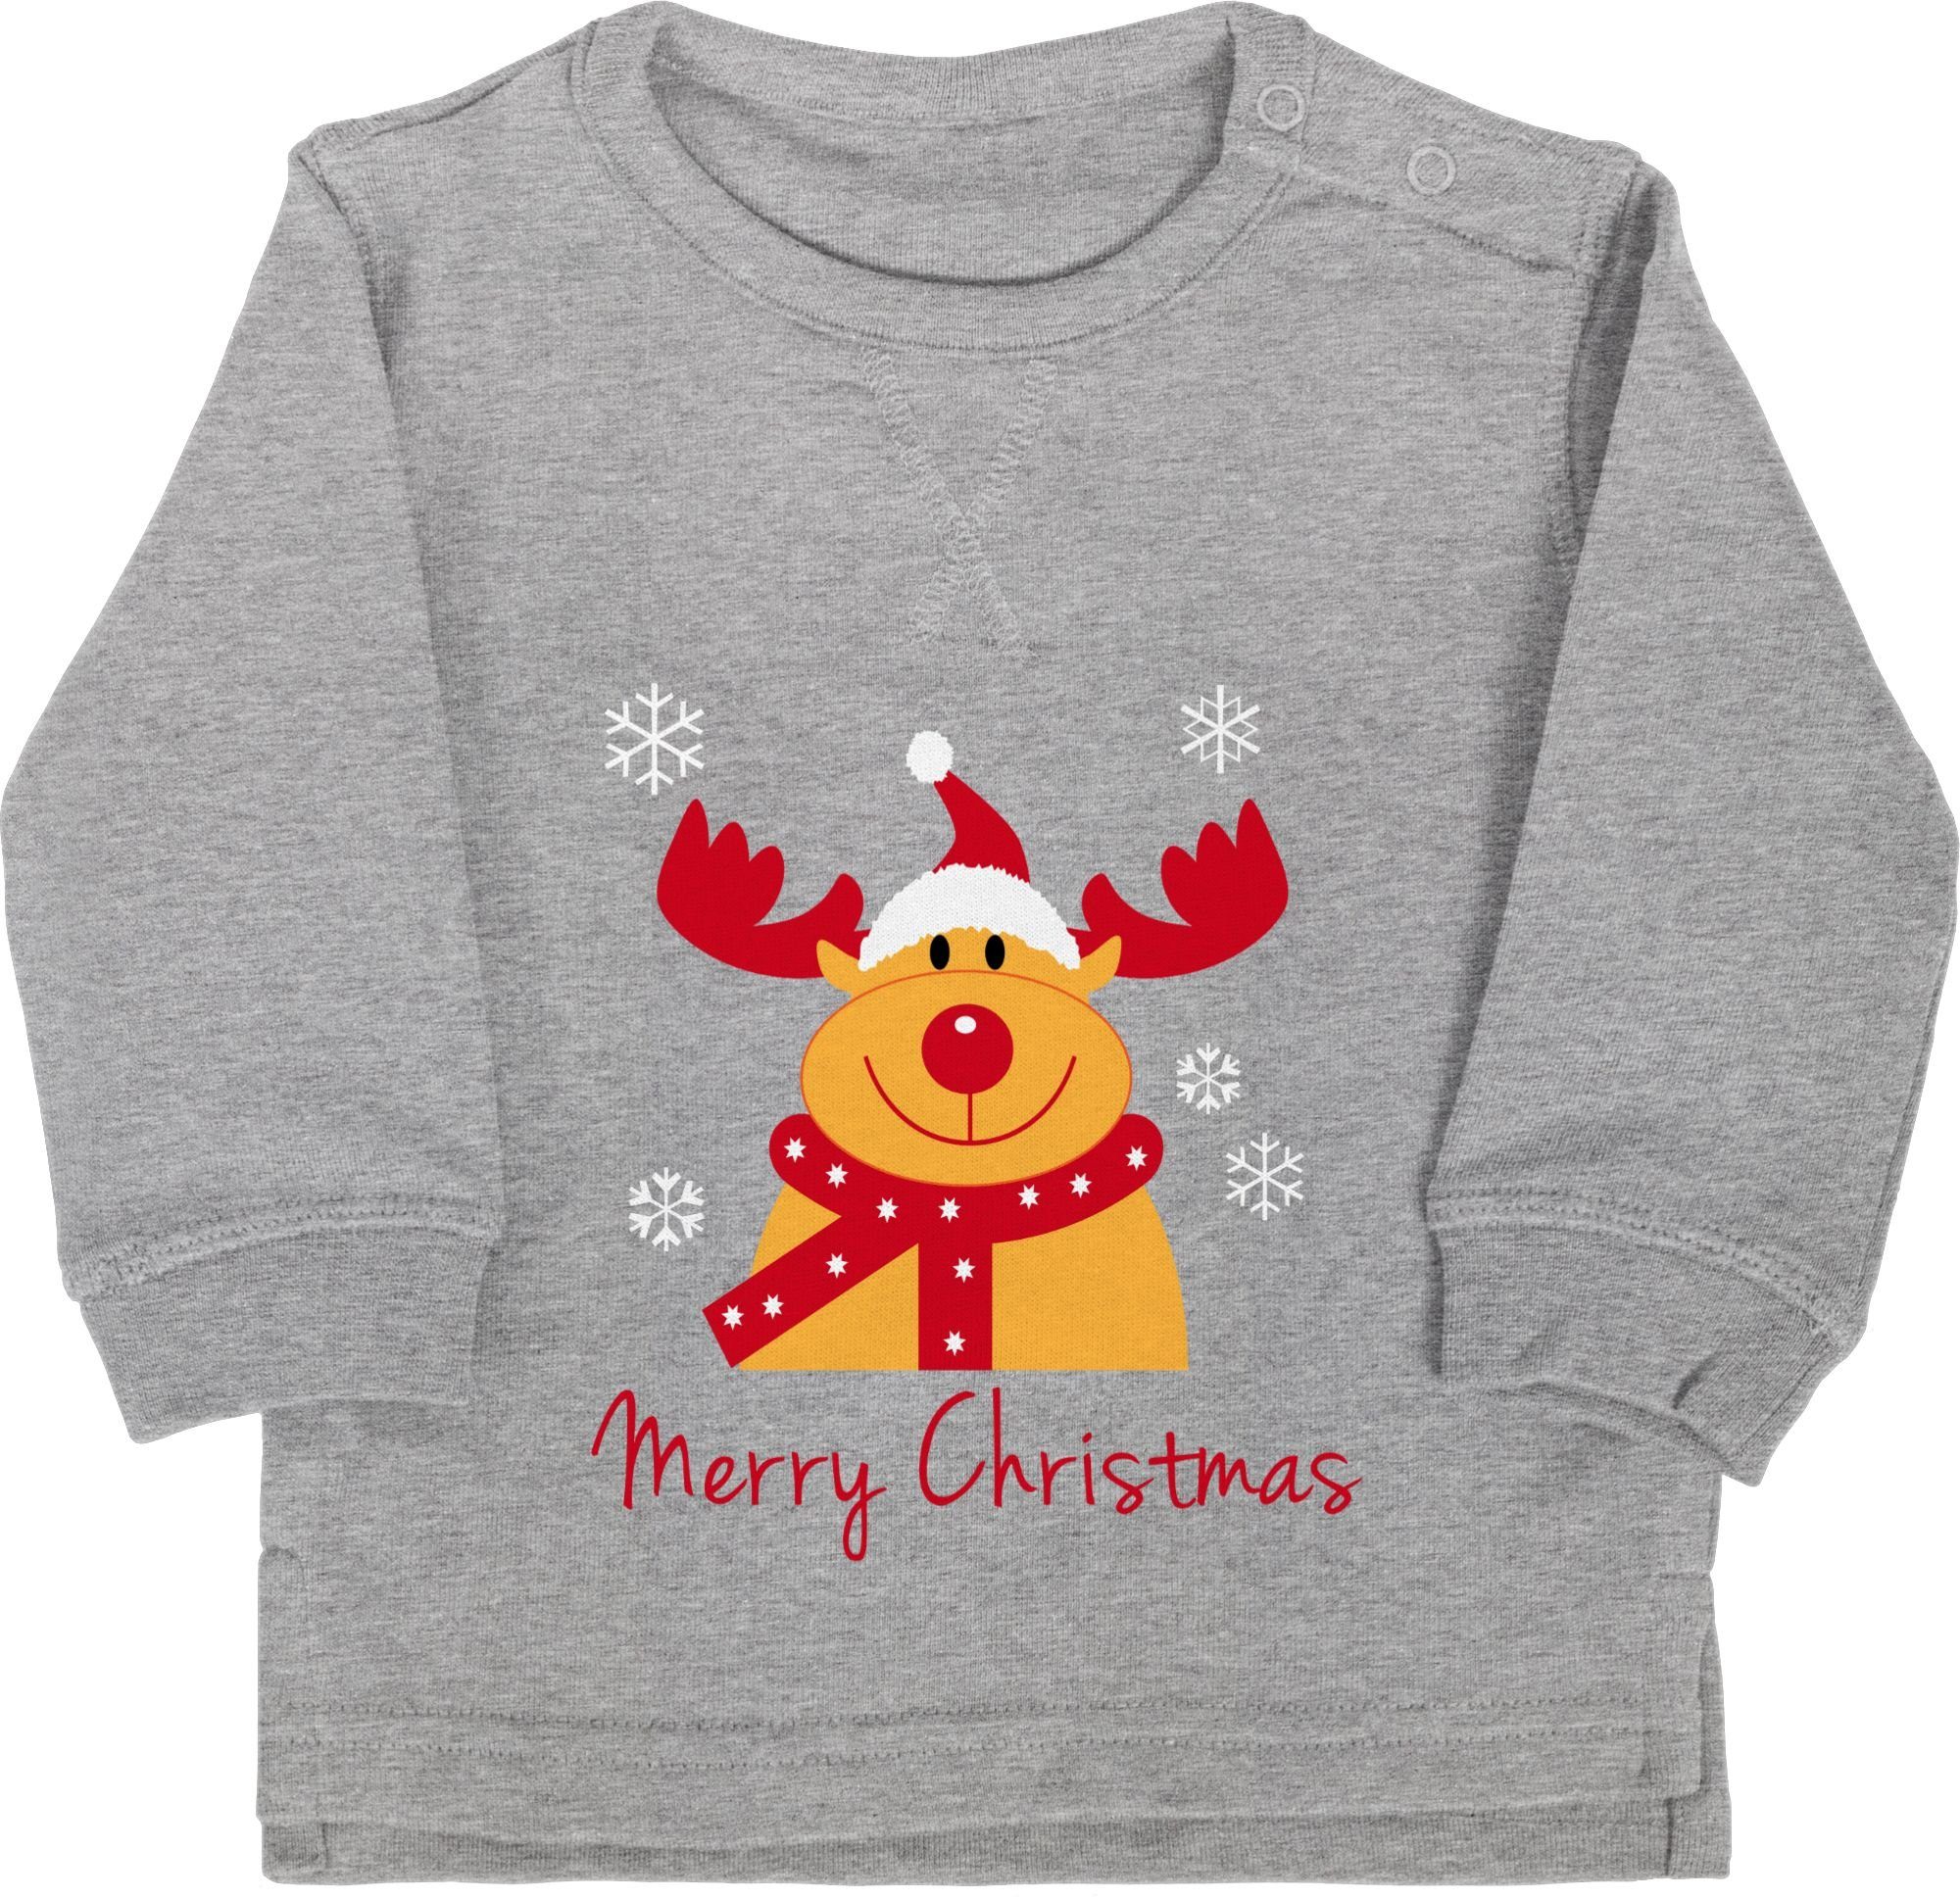 Shirtracer Sweatshirt Merry Christmas Rentier Weihnachten Kleidung Baby 2 Grau meliert